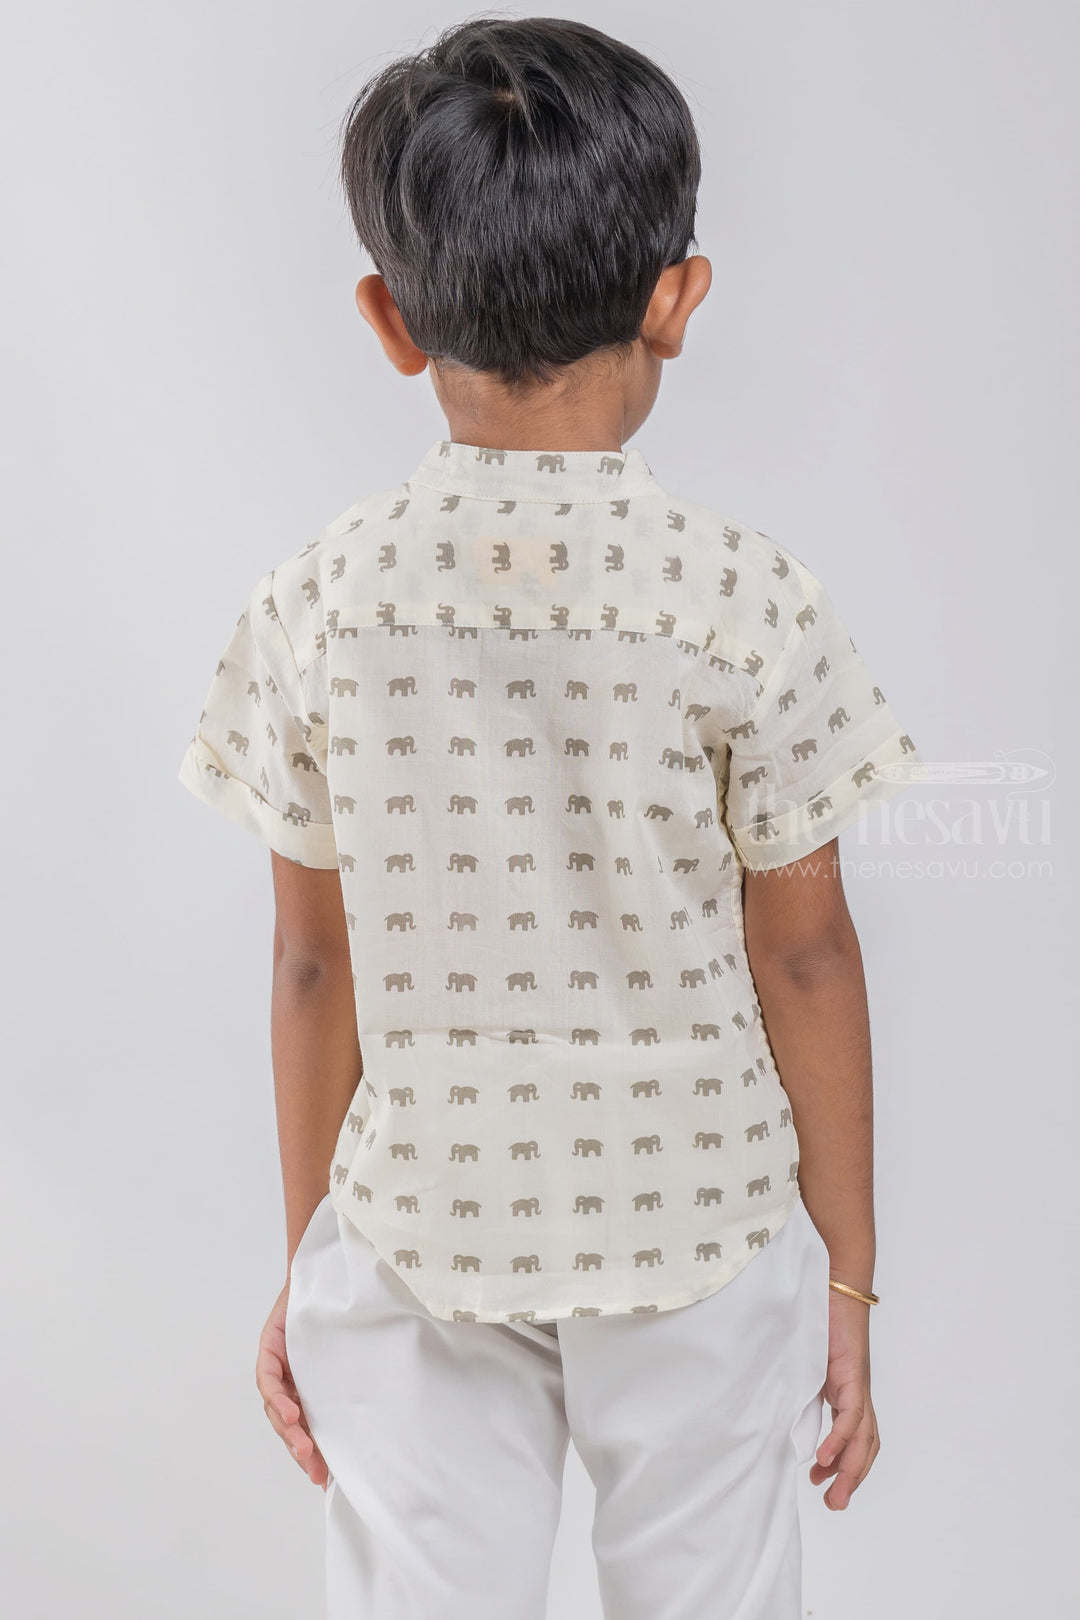 The Nesavu Boys Cotton Shirt Mini Brown Elephant Printed White Cotton Shirt for Boys by The Nesavu psr silks Nesavu